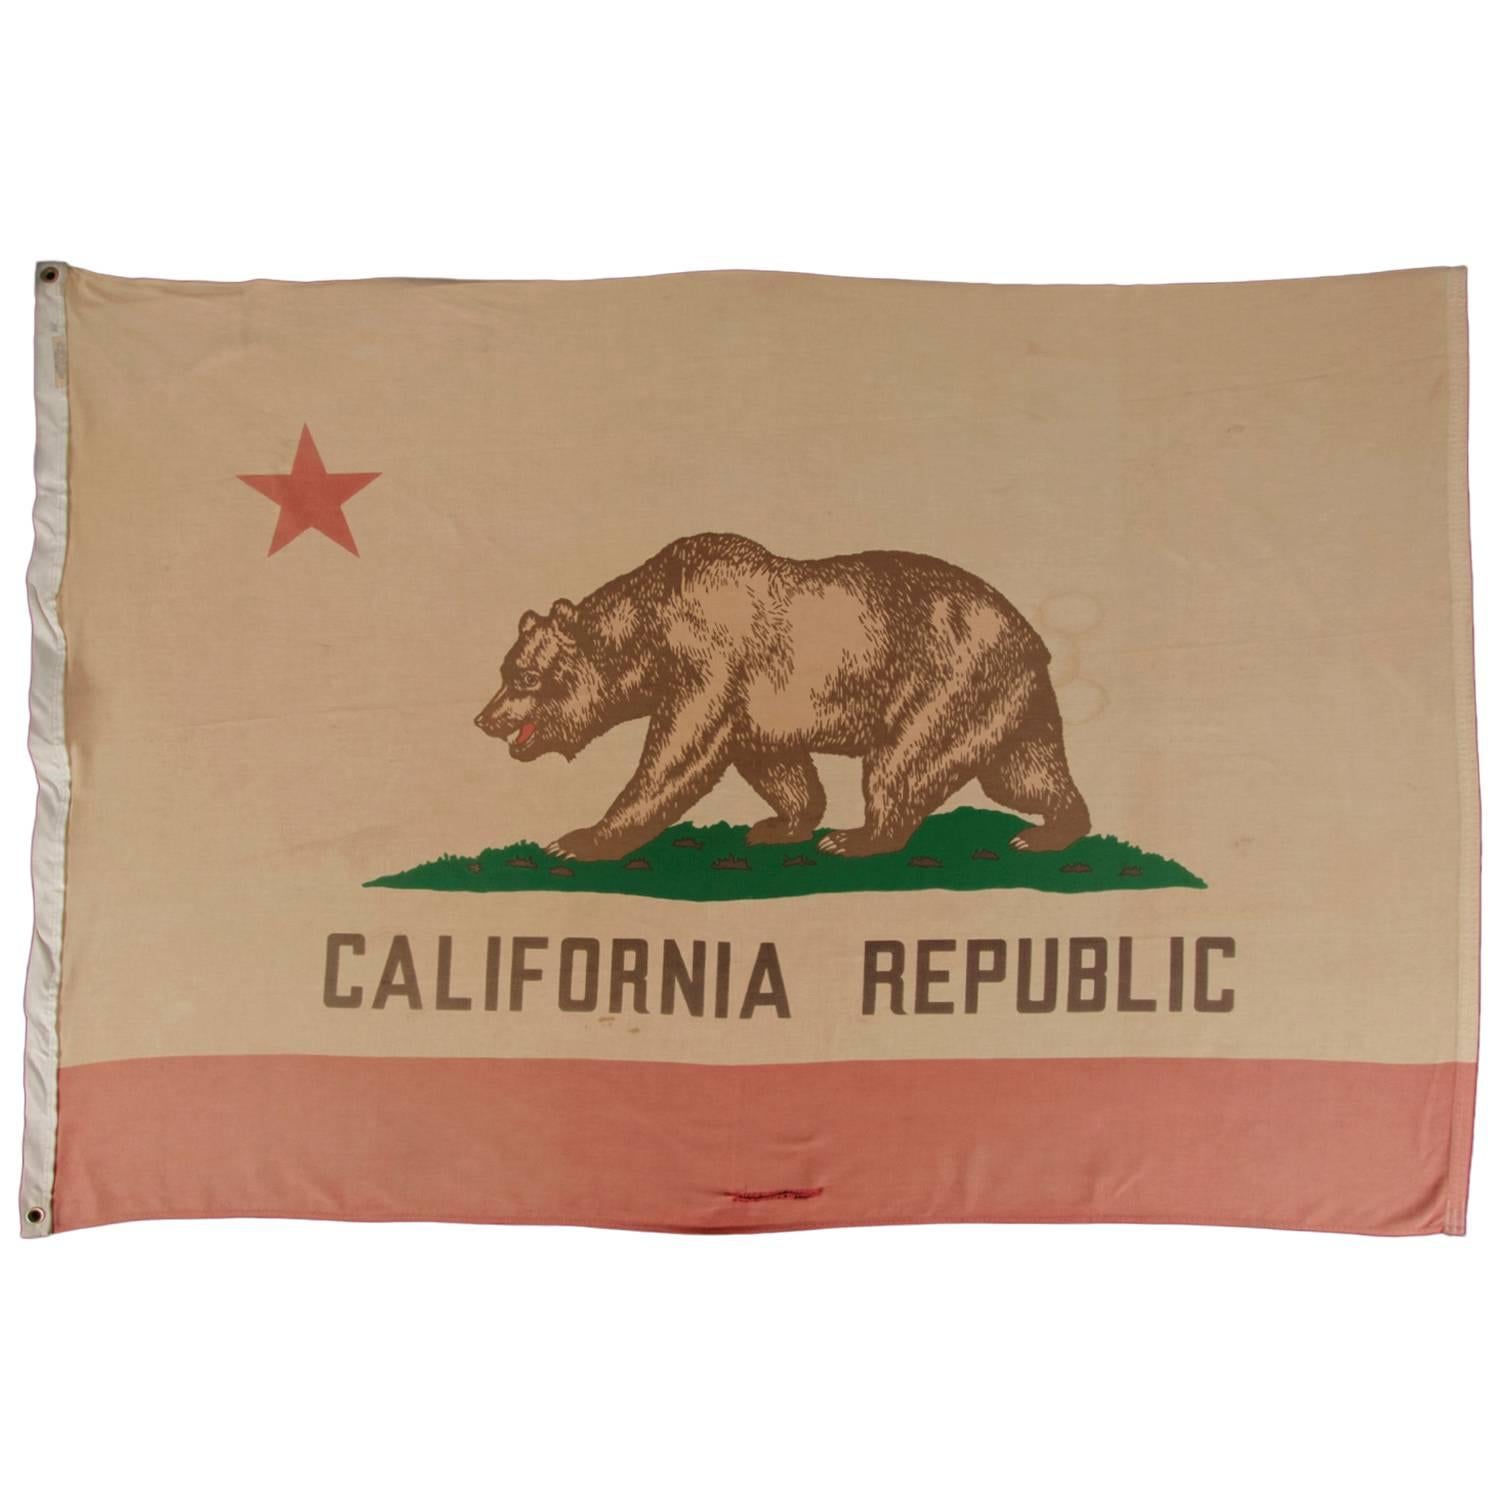 Vintage California State Flag, circa 1950s-1960s